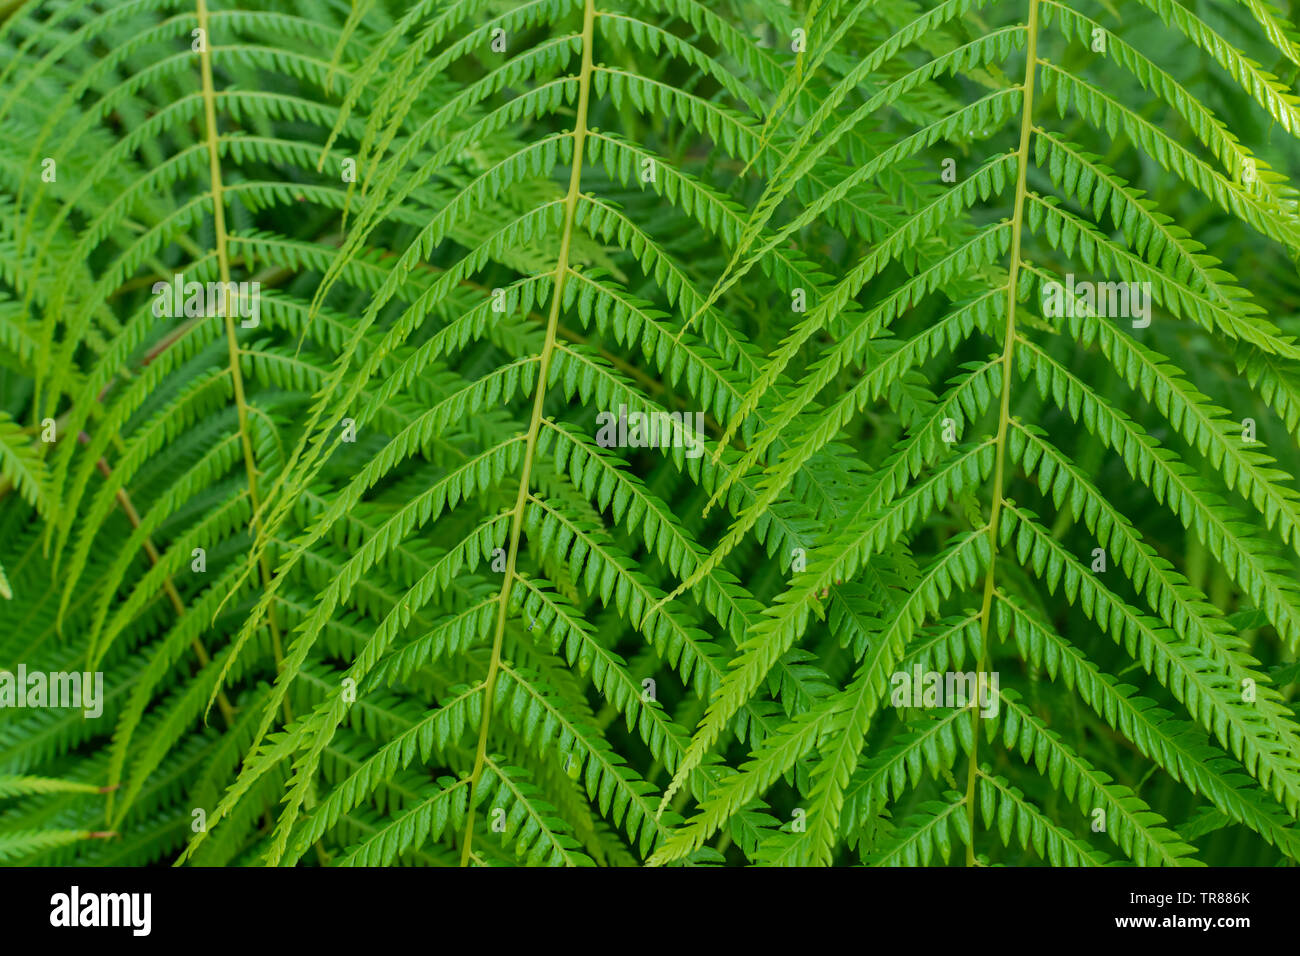 Mexican tree fern (Cibotium schiedei), close view, fern texture Stock Photo